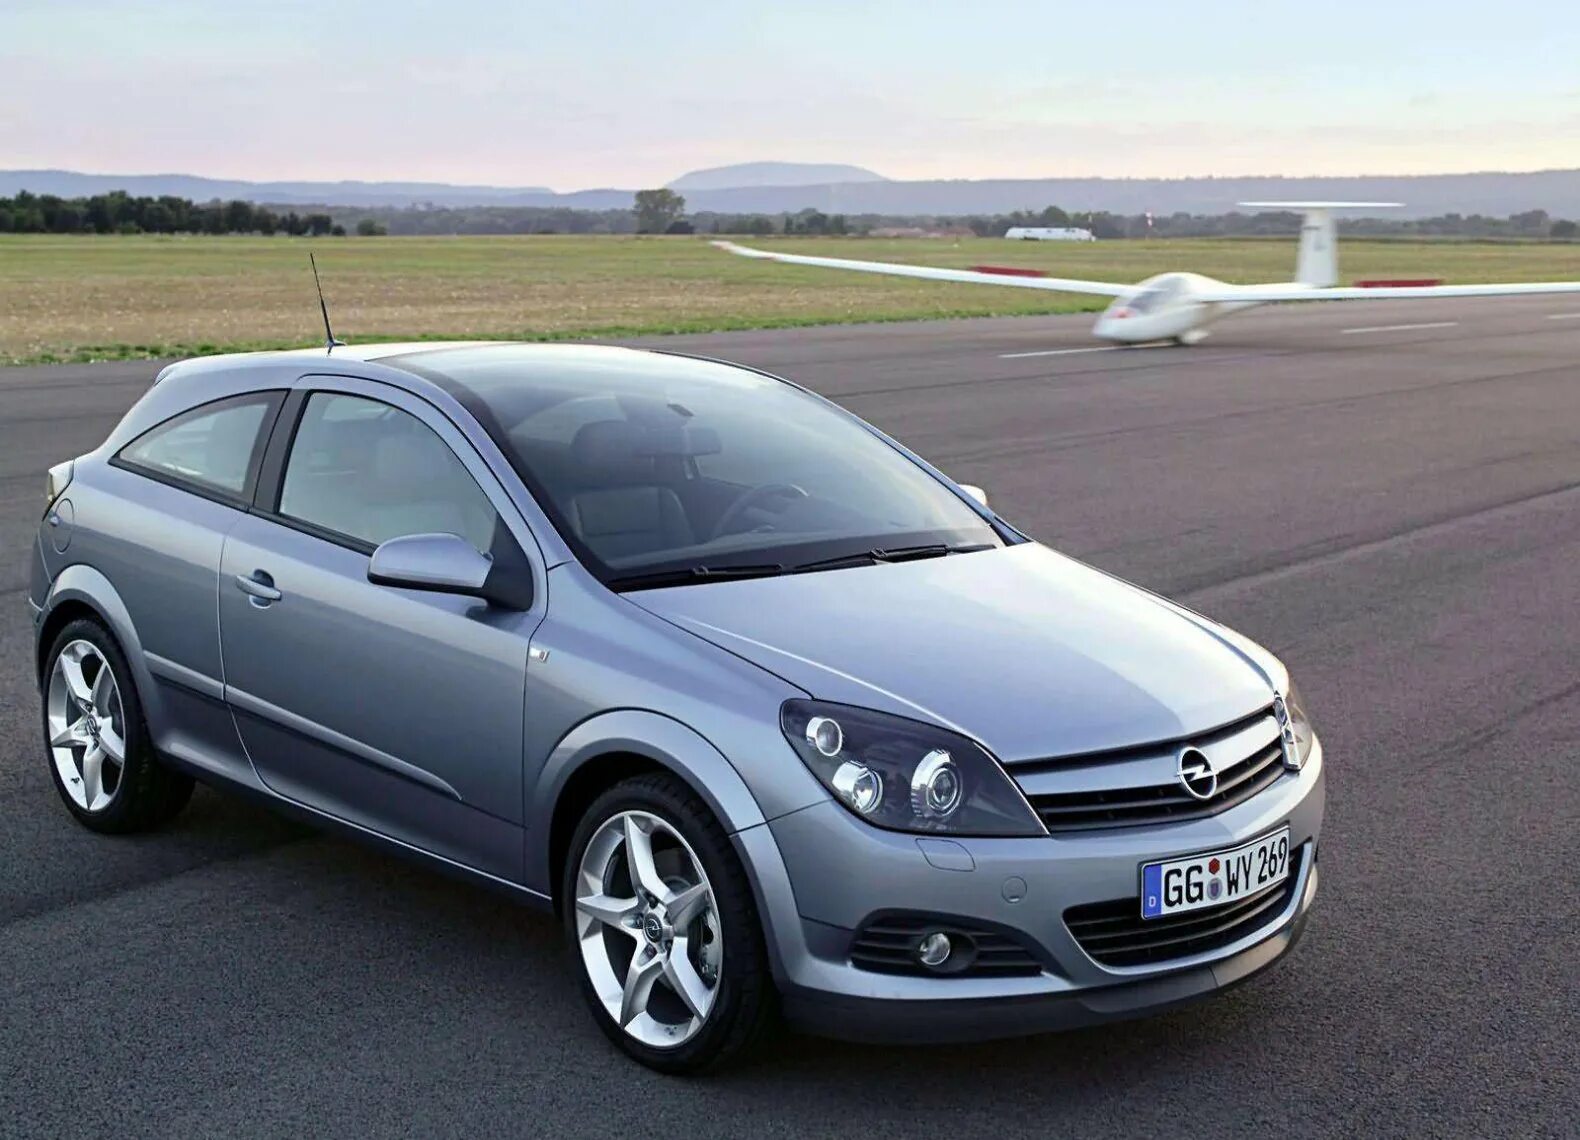 Opel Astra h GTC. Opel Asrrah. Opel Astra GTC H 1.8. Opel Astra h GTC 1.6.